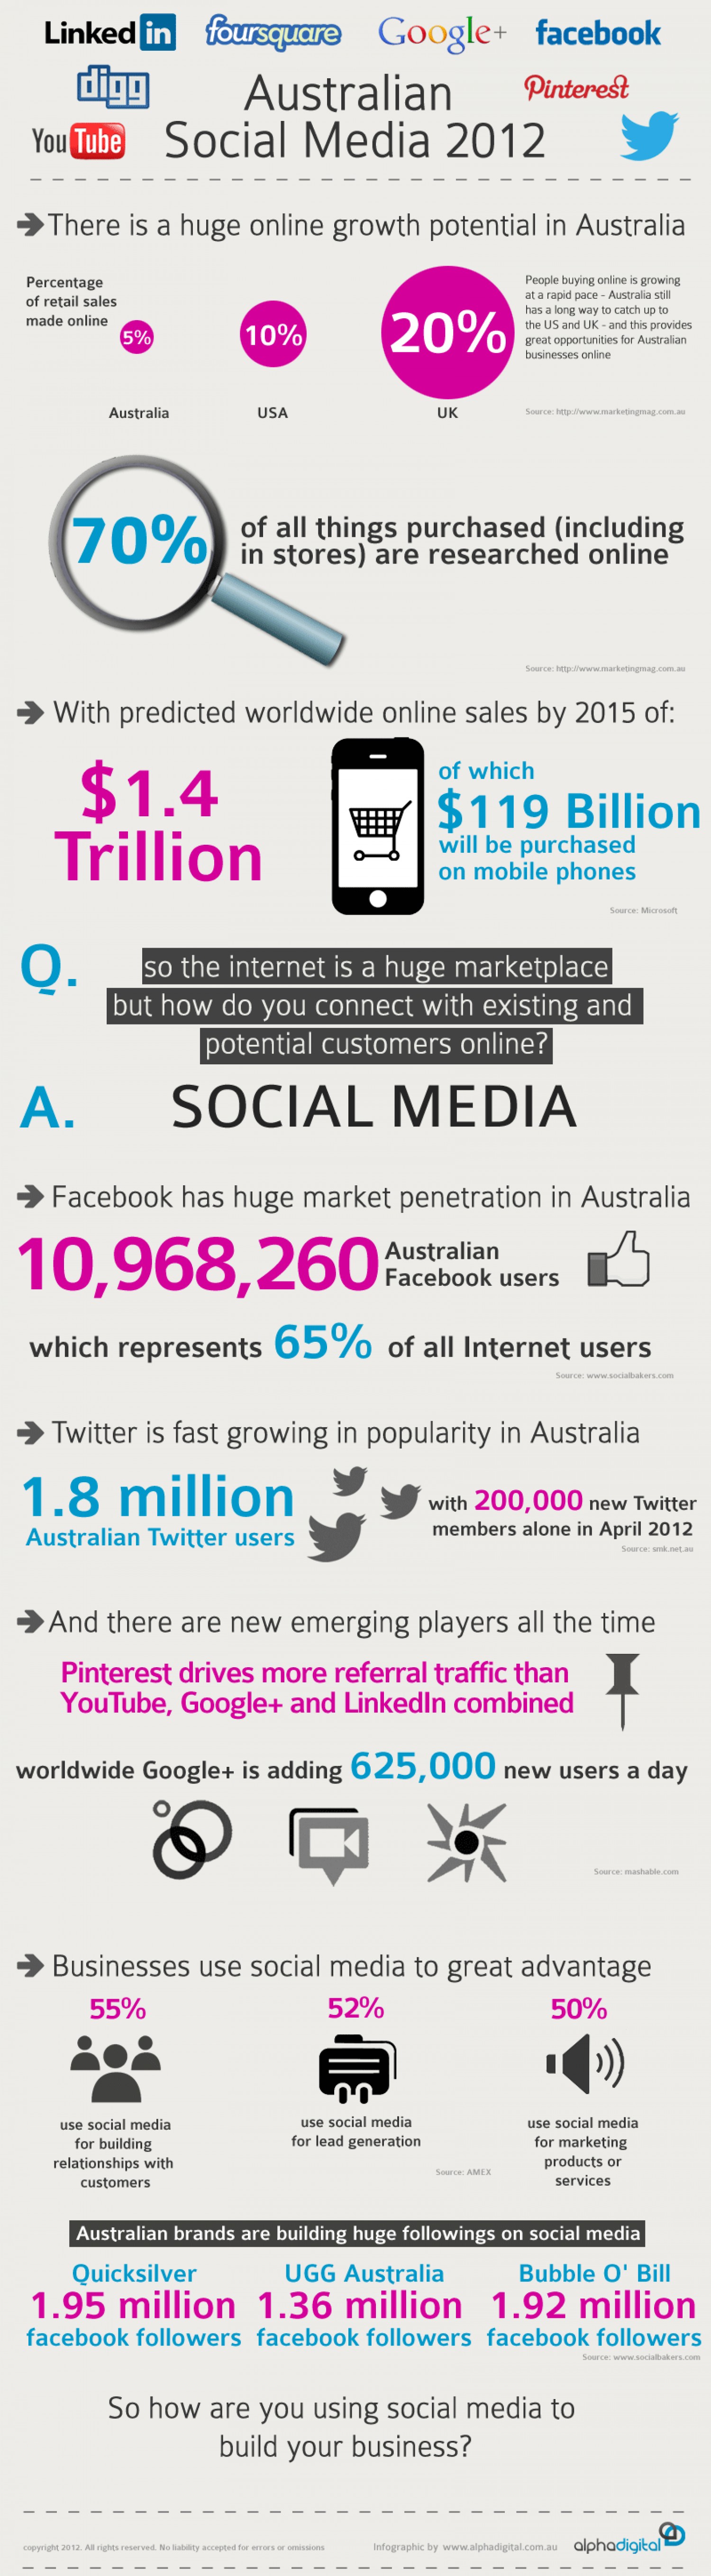 14. Social Media and Australia